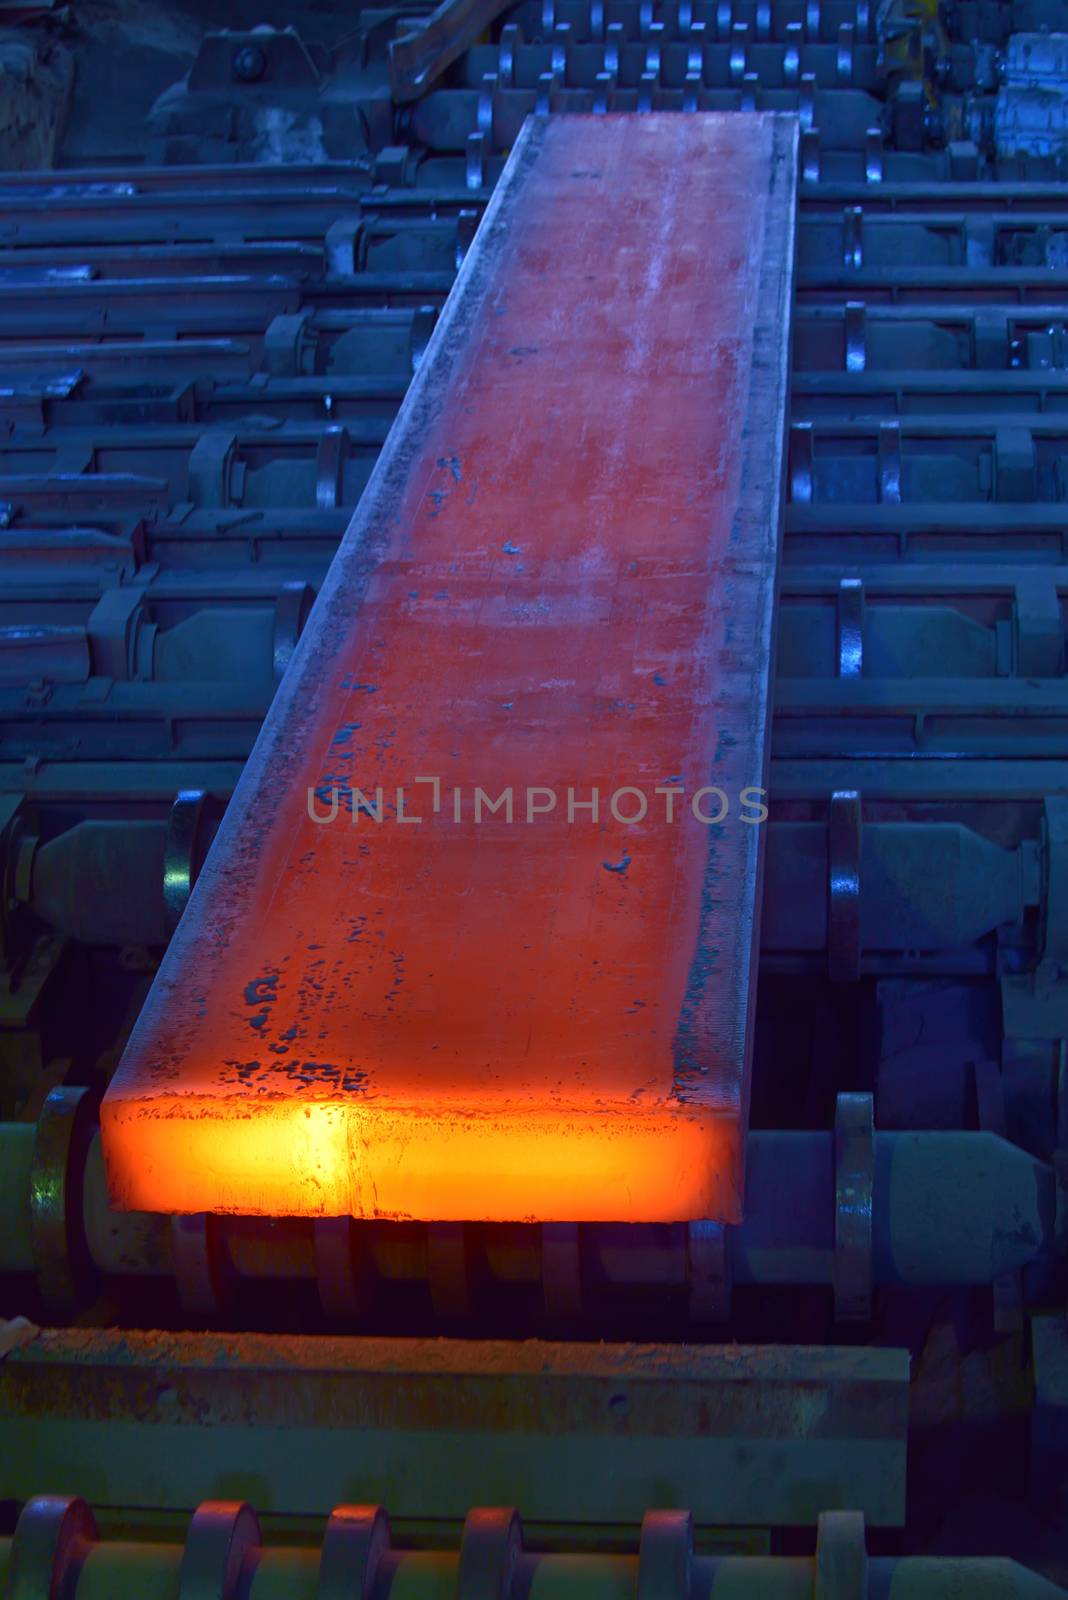 hot steel on conveyor inside of steel plant

